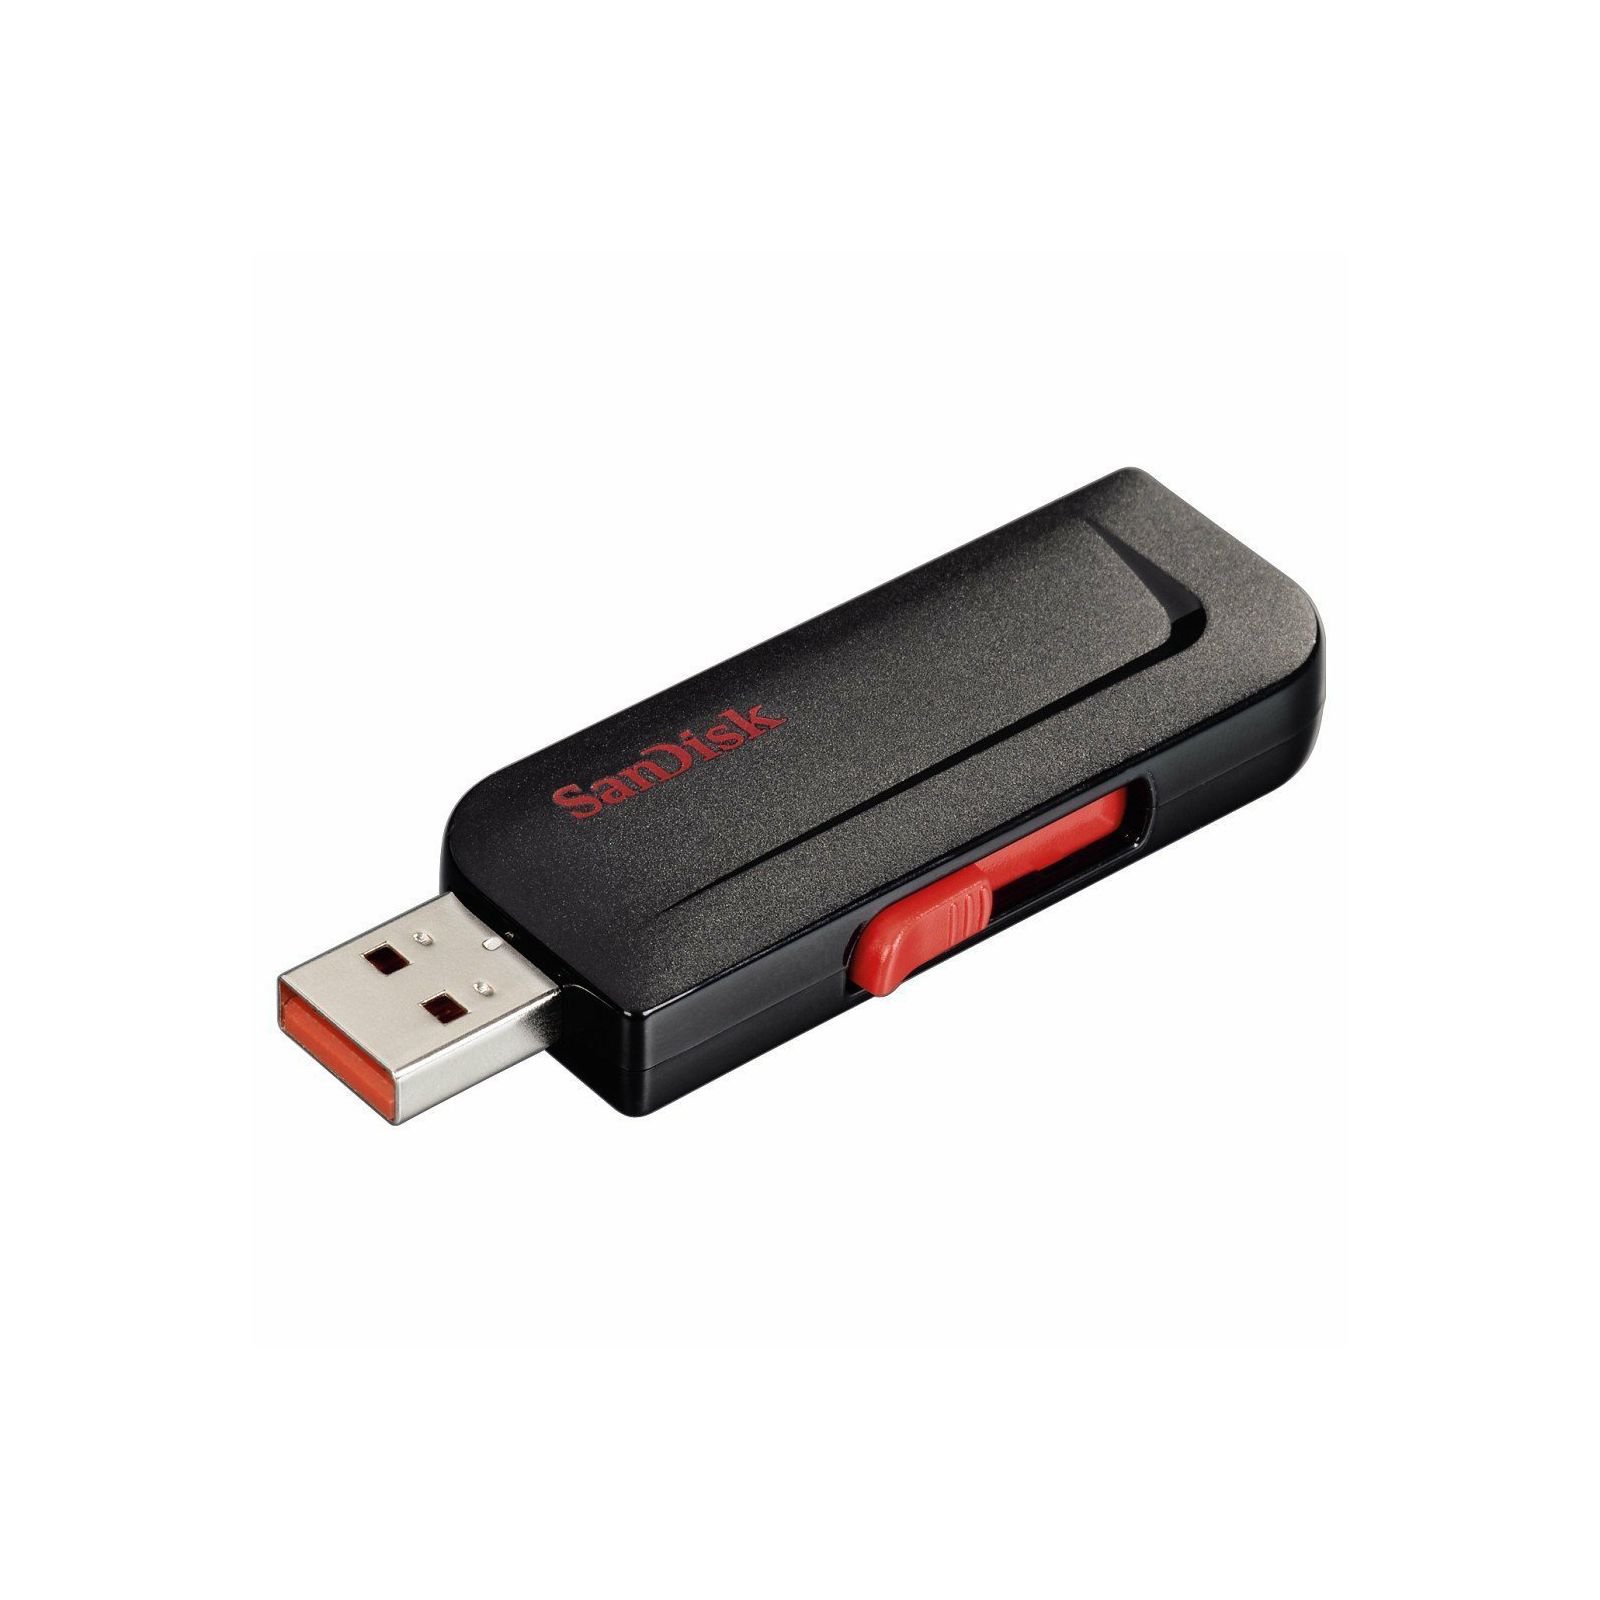 SanDisk Cruzer Slice 4GB SDCZ37-004G-B35 USB Memory Stick